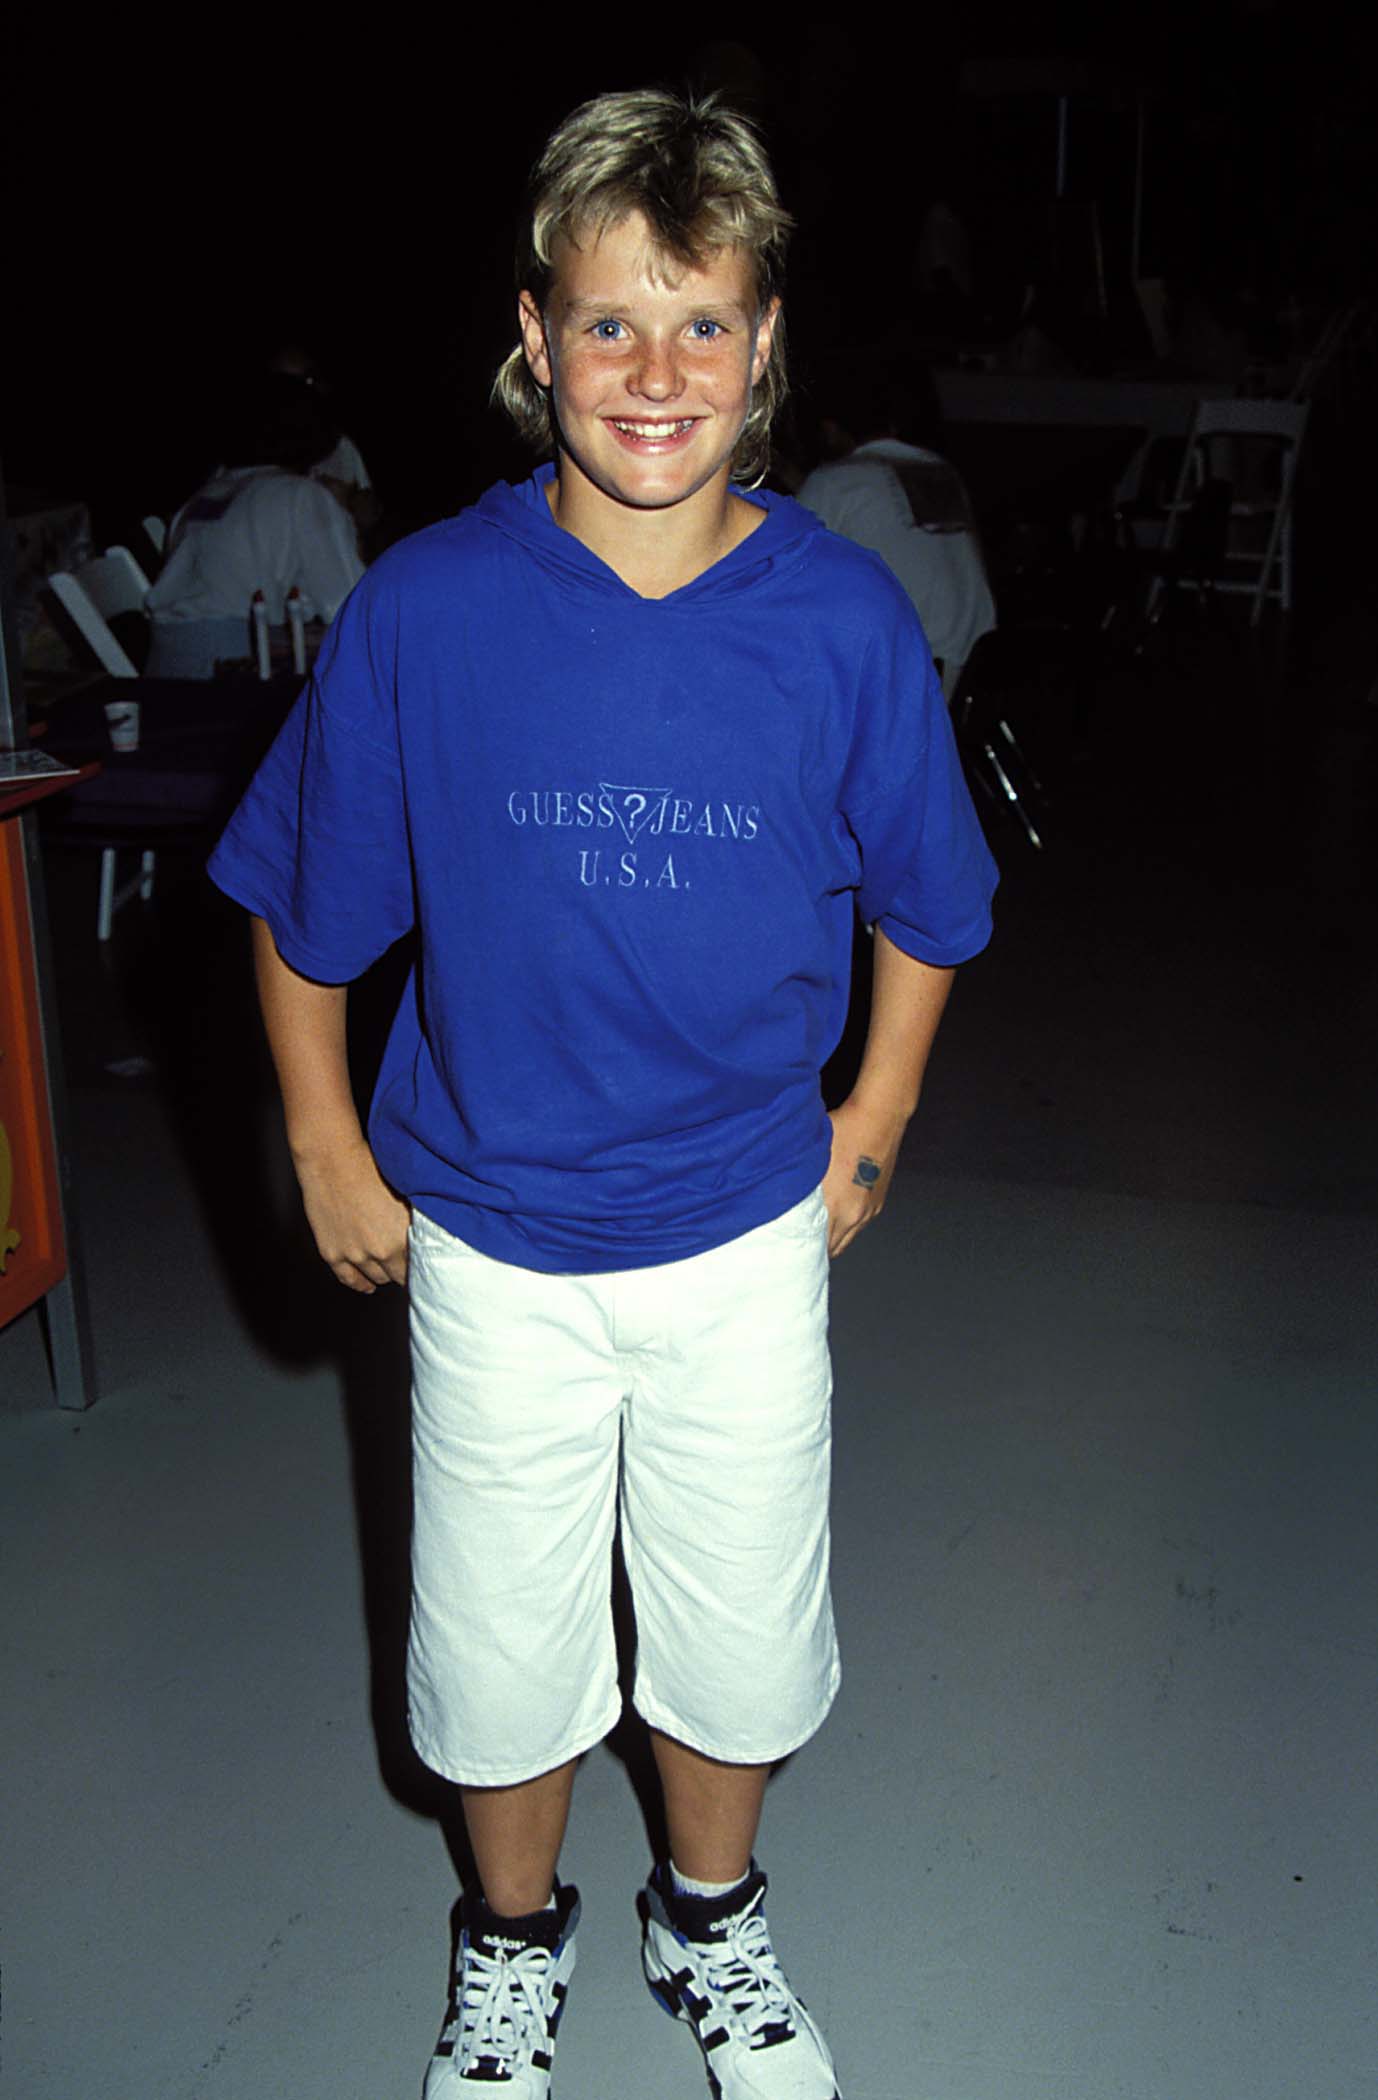 Zachery Ty Bryan on September 07, 1990 | Source: Getty Images